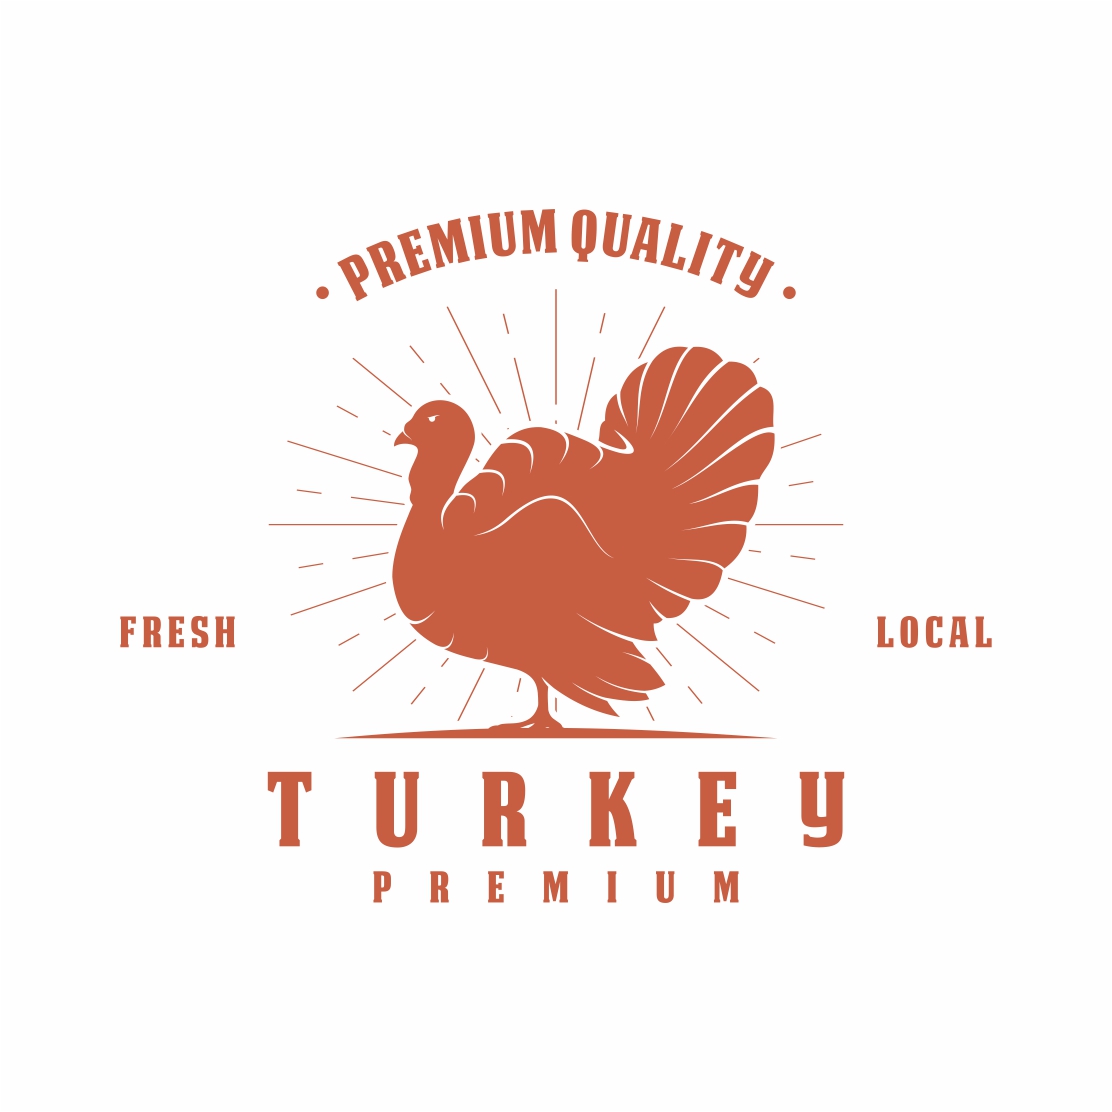 Turkey Farm logo design - only 5$ preview image.